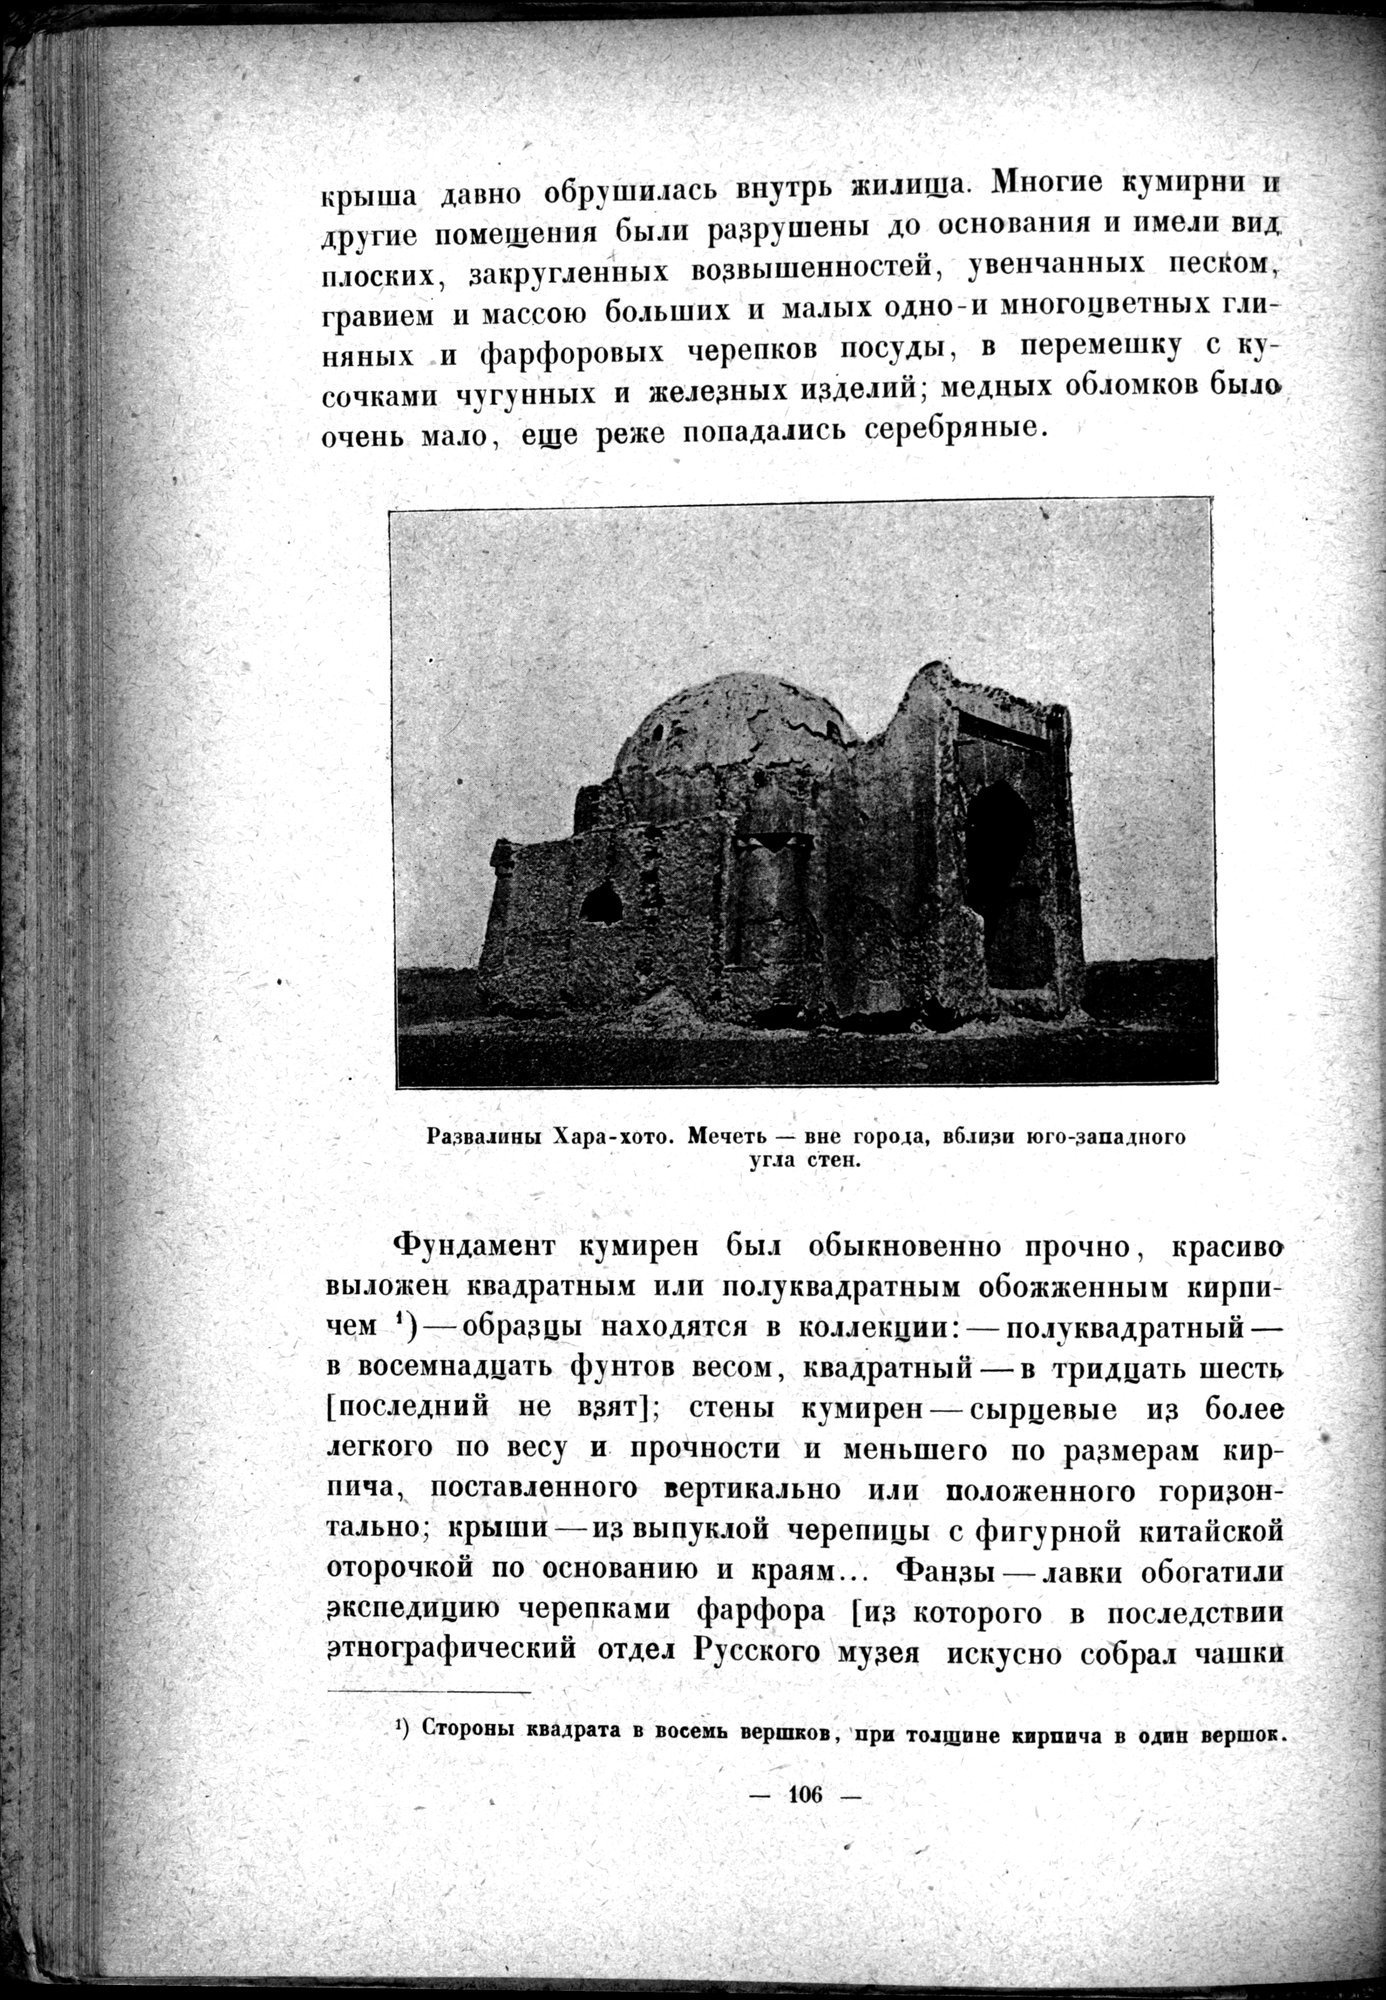 Mongoliya i Amdo i mertby gorod Khara-Khoto : vol.1 / Page 132 (Grayscale High Resolution Image)